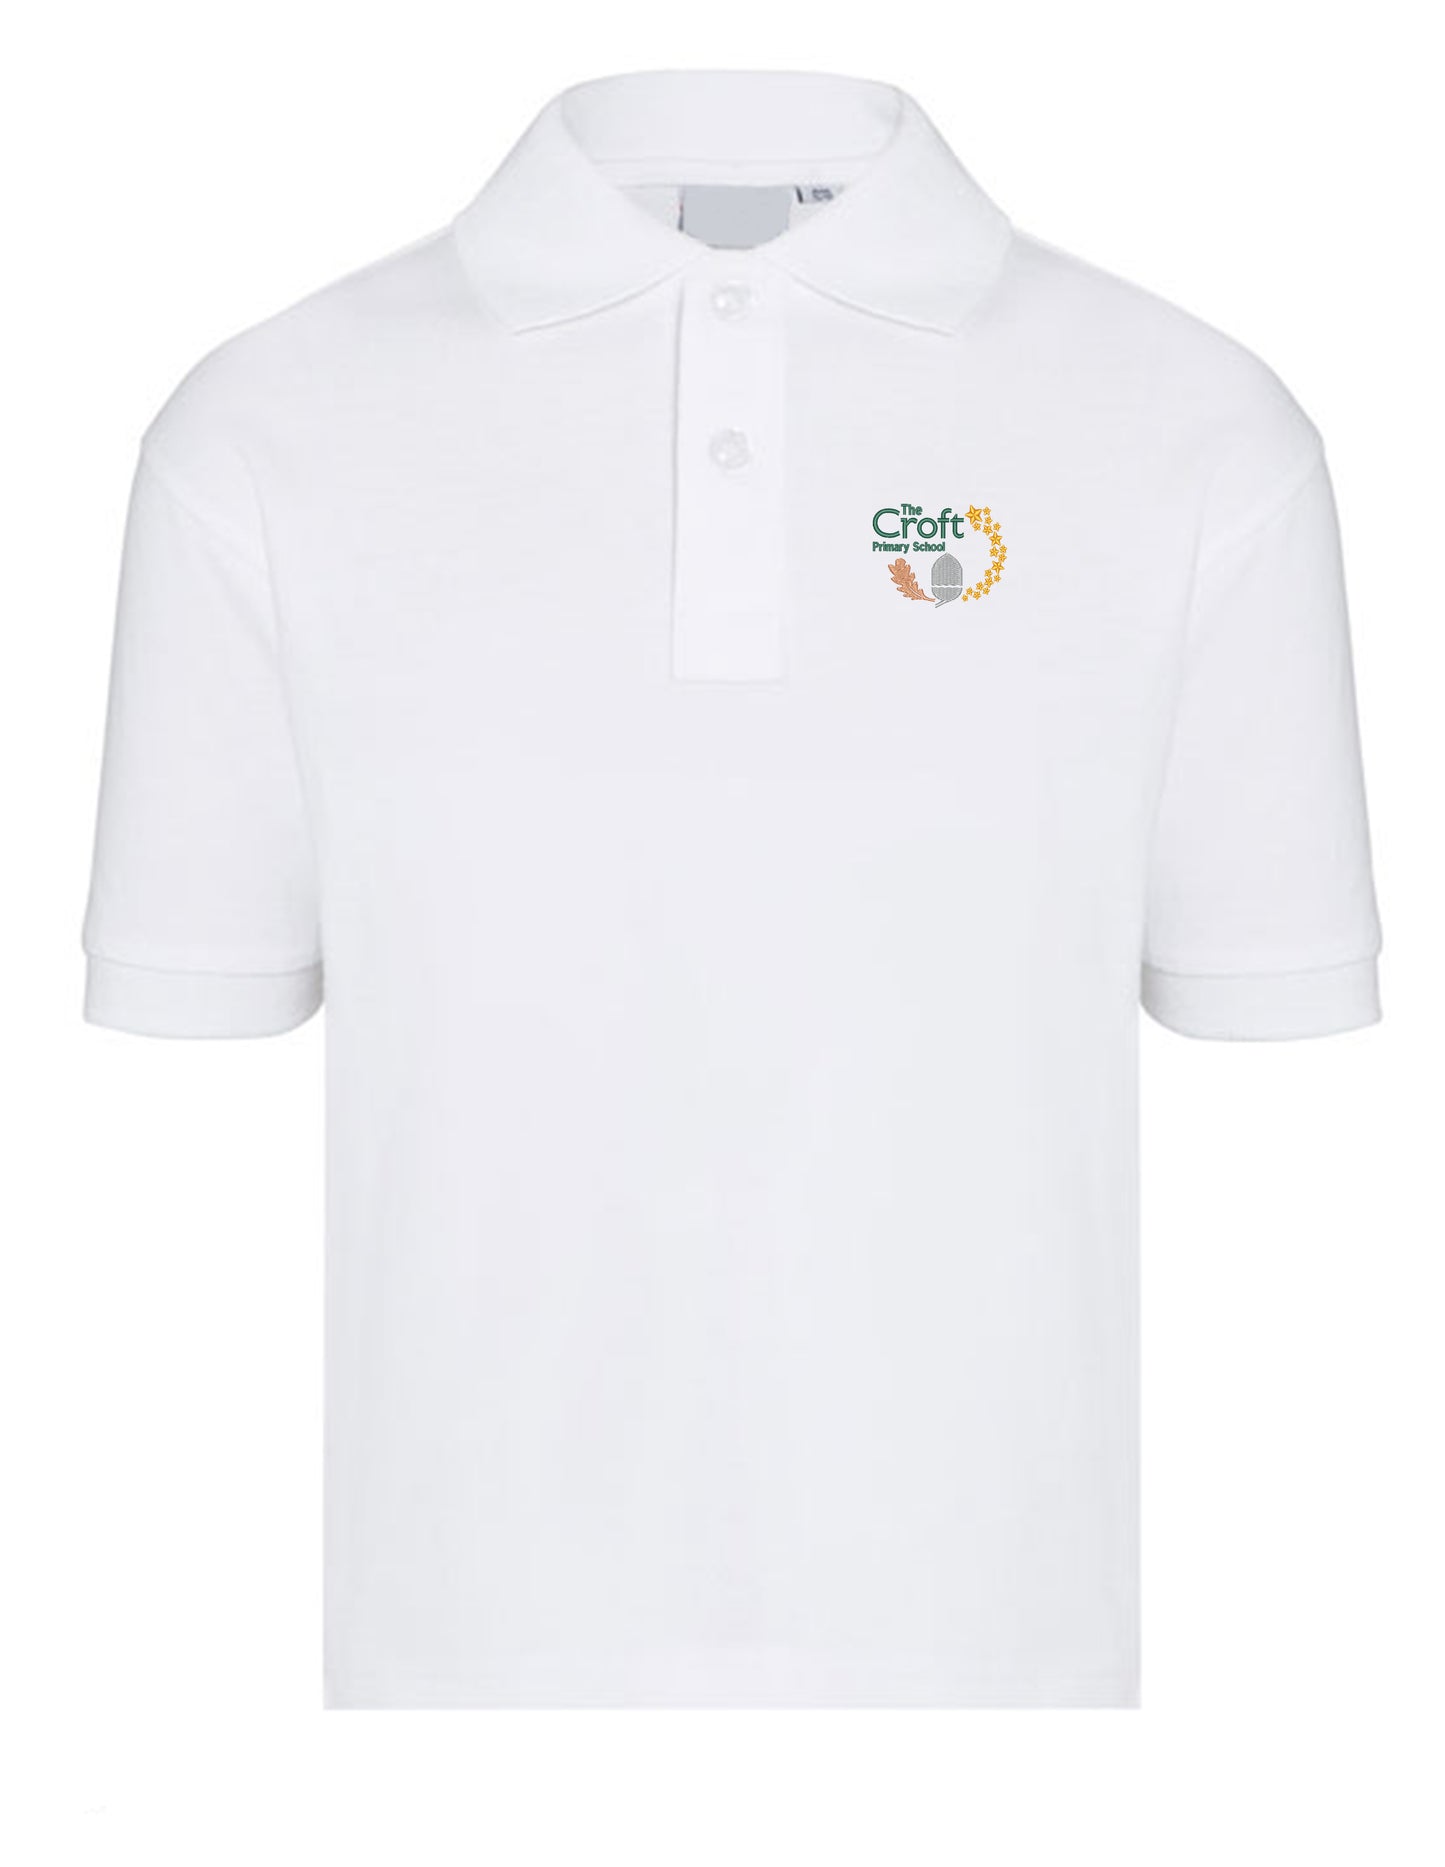 The Croft Primary School - White Polo Shirt - School Uniform Shop